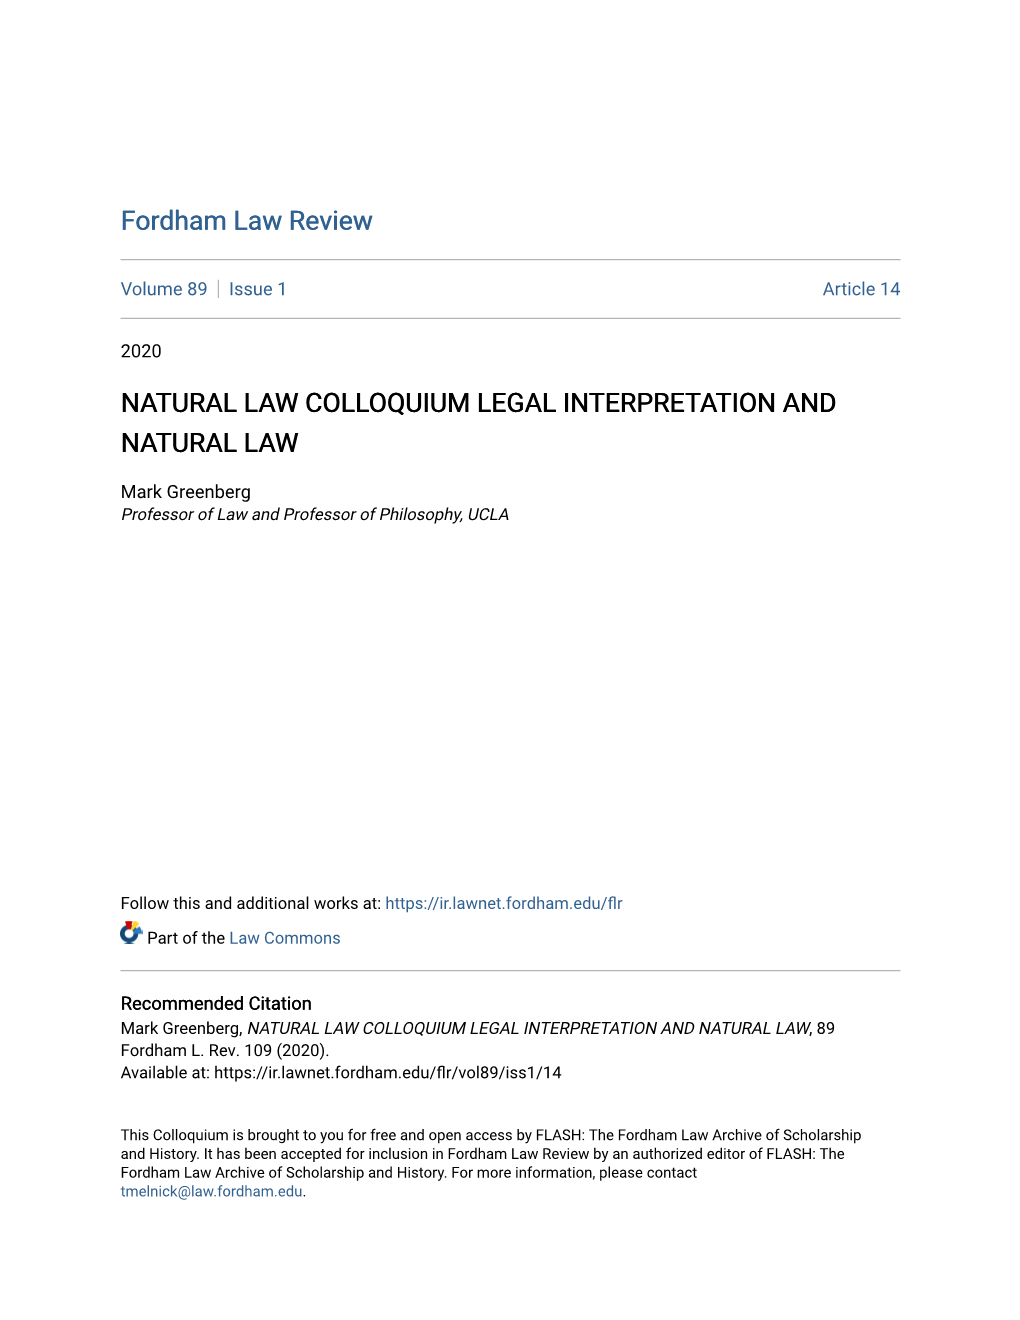 Legal Interpretation and Natural Law